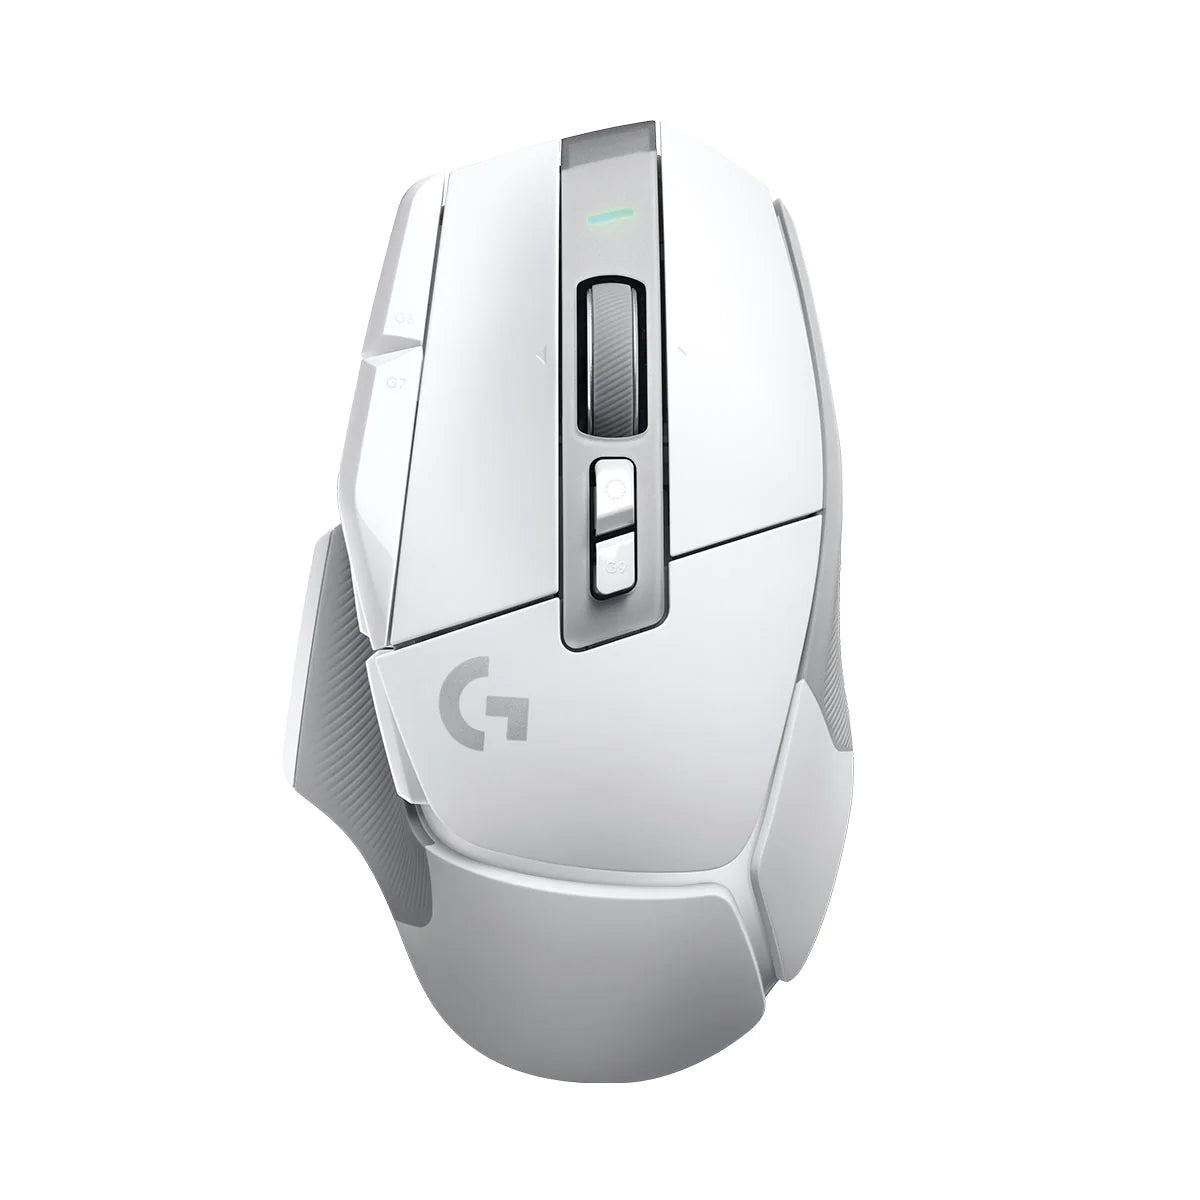 Logitech G502 X LIGHTSPEED 無線遊戲滑鼠